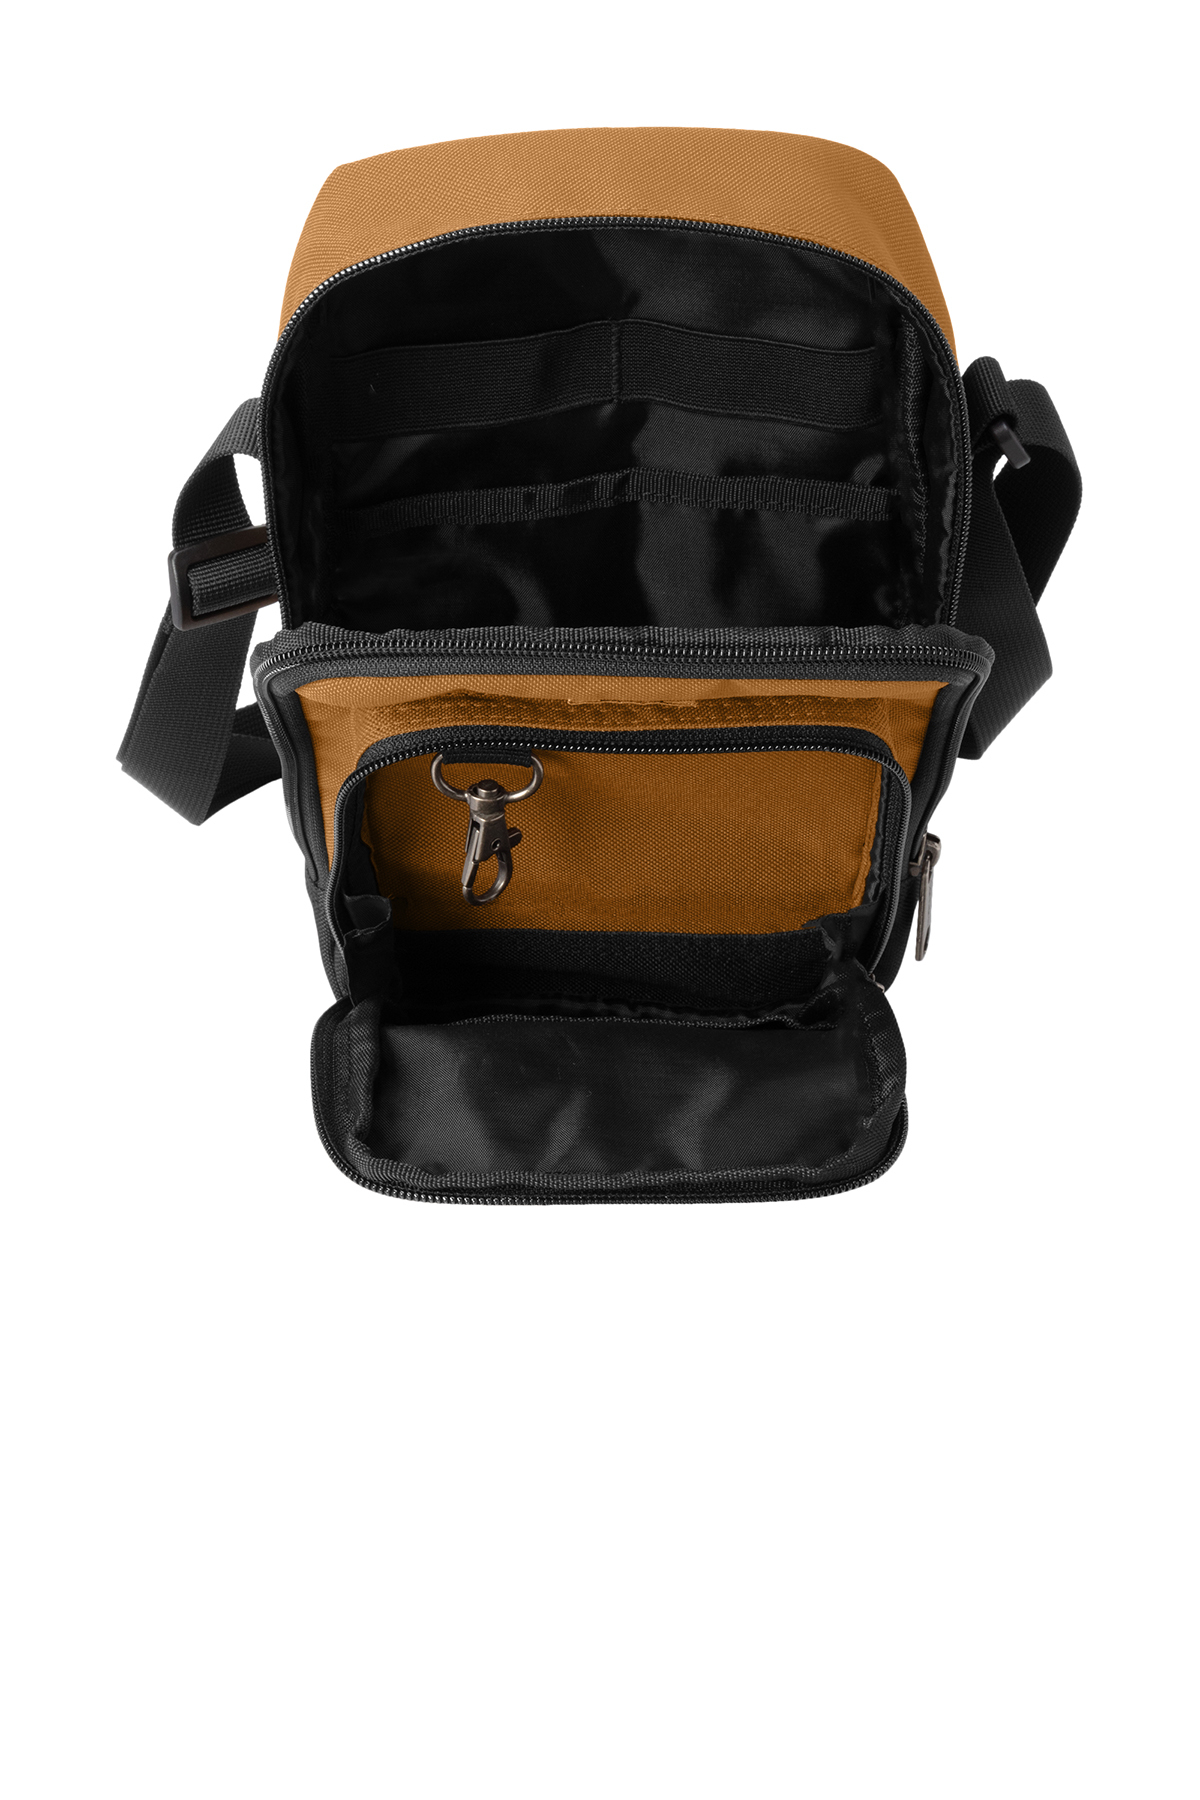 Carhartt Bag Practical Crossbody Men Women Travel Shoulder